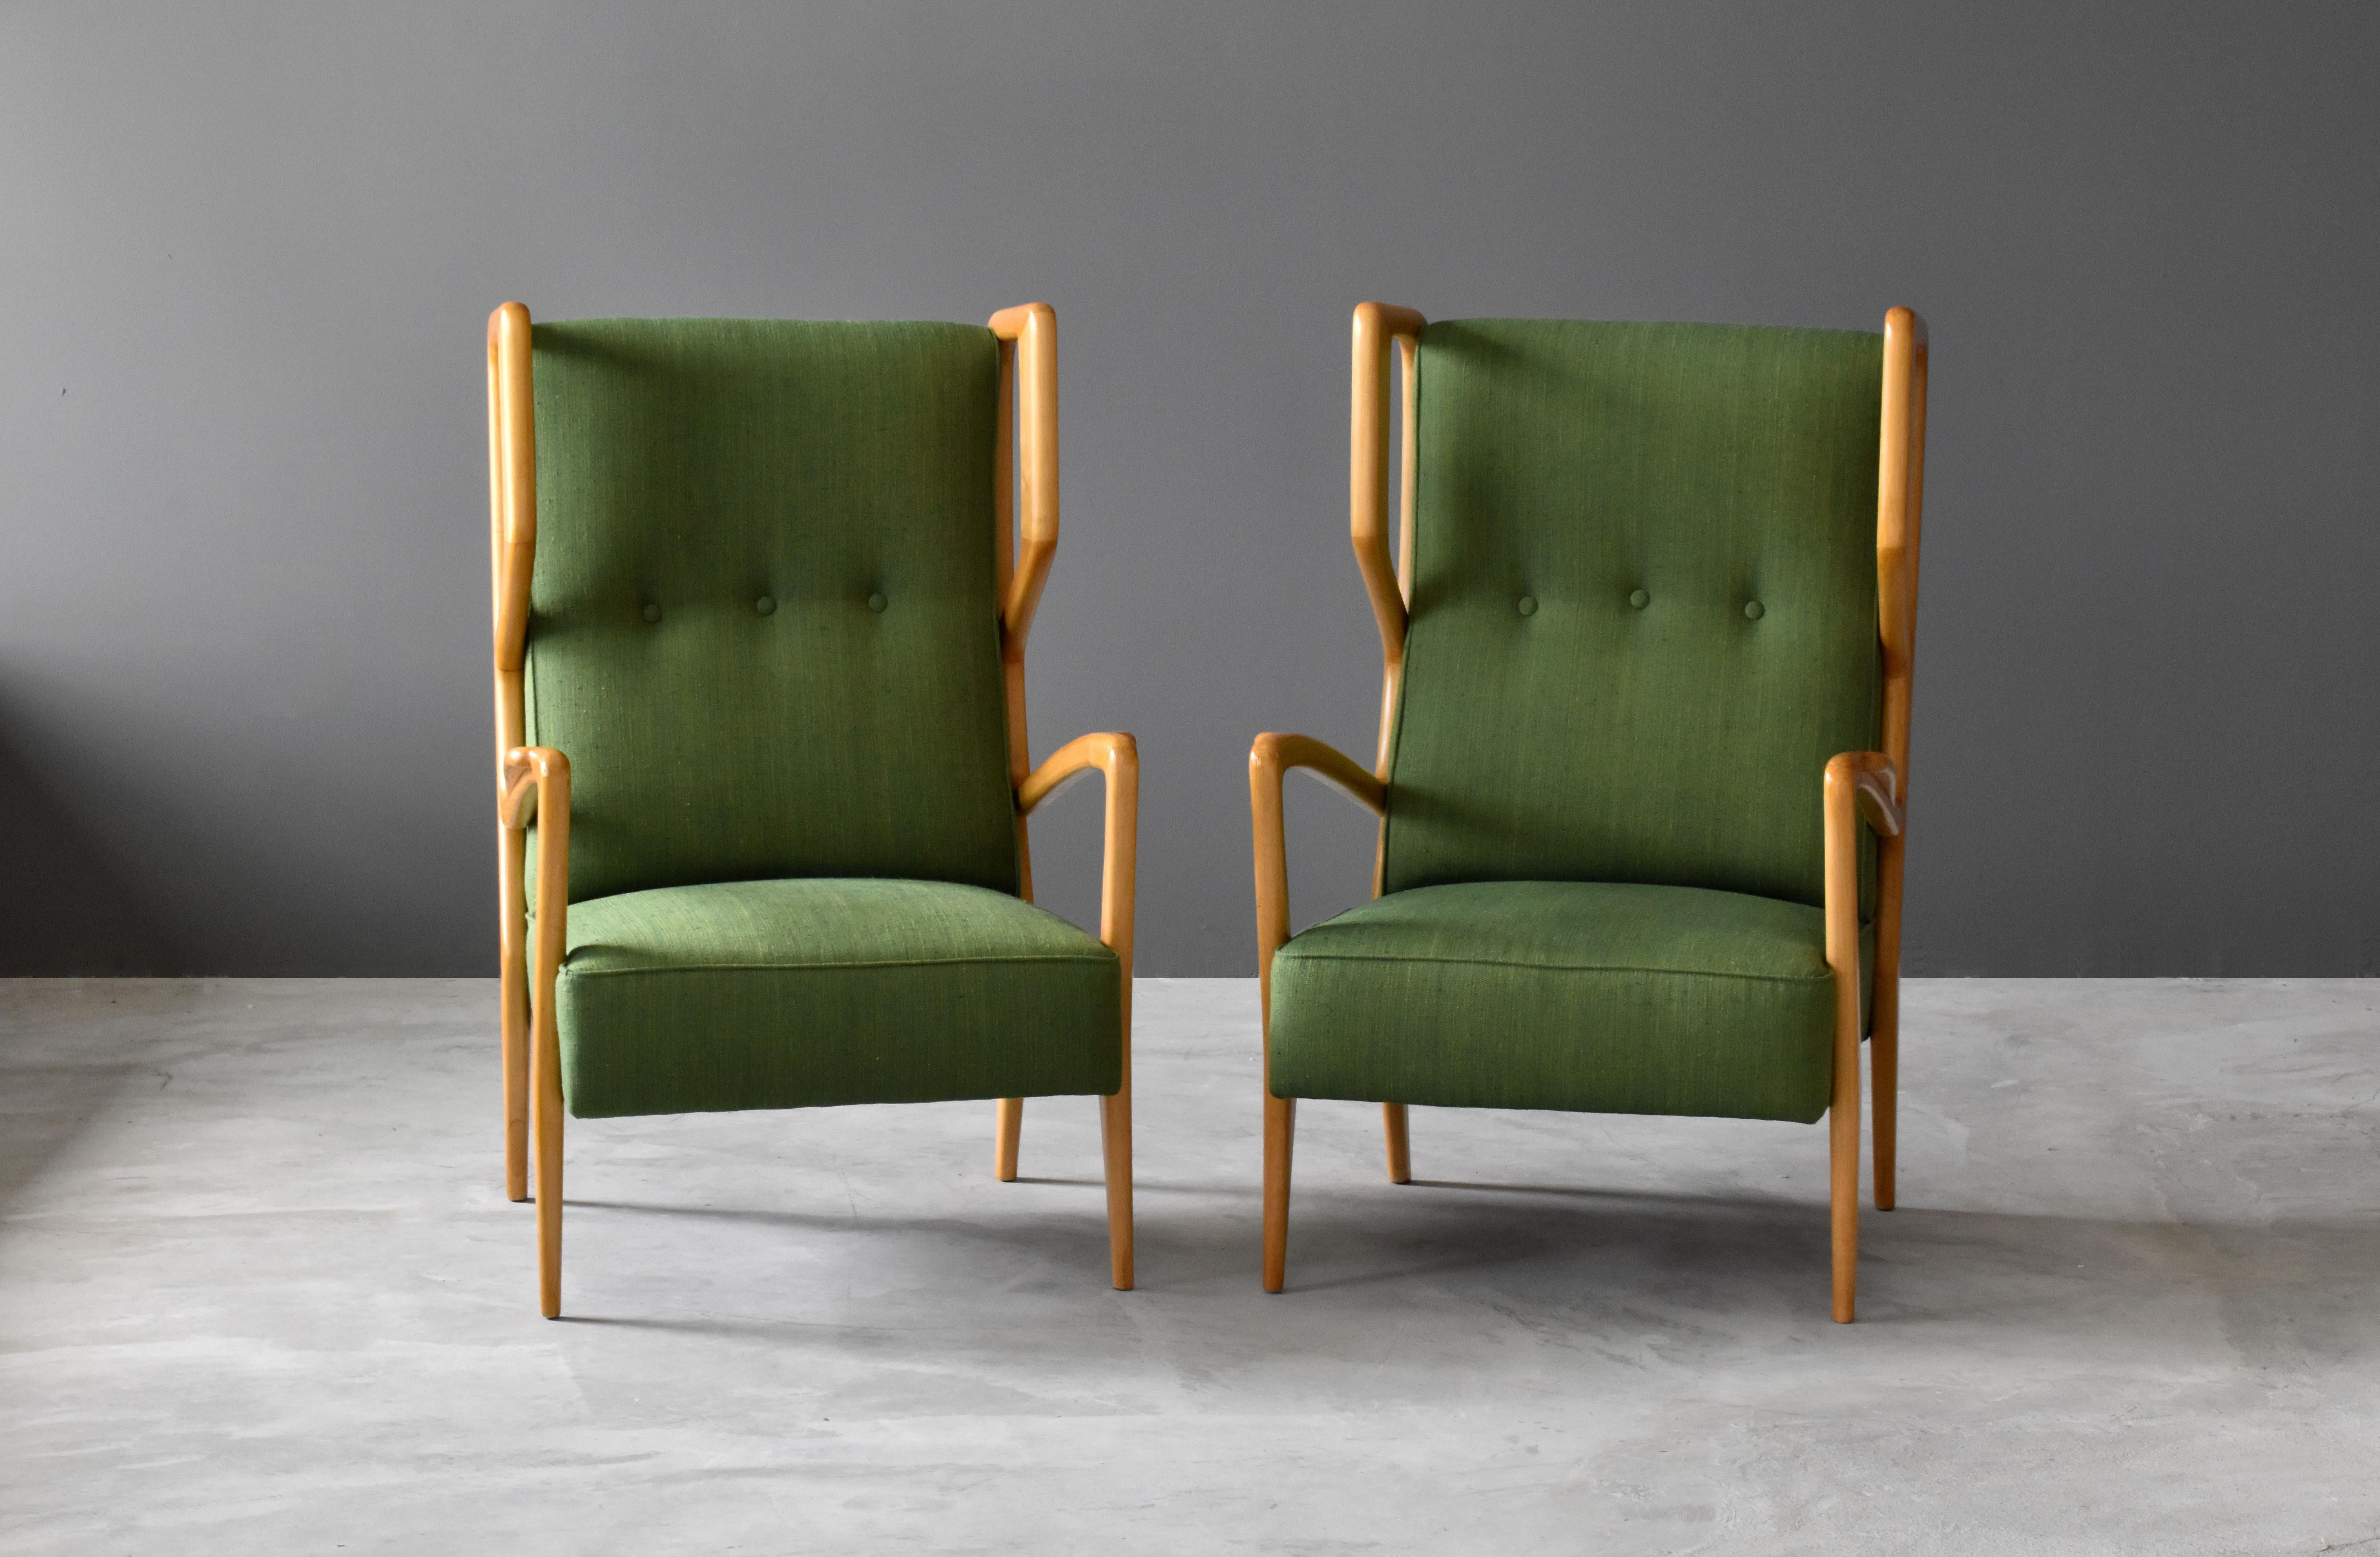 Italian Orlando Orlandi, Rare Lounge Chairs, Green Fabric, Wood, Brianza, Italy, 1948